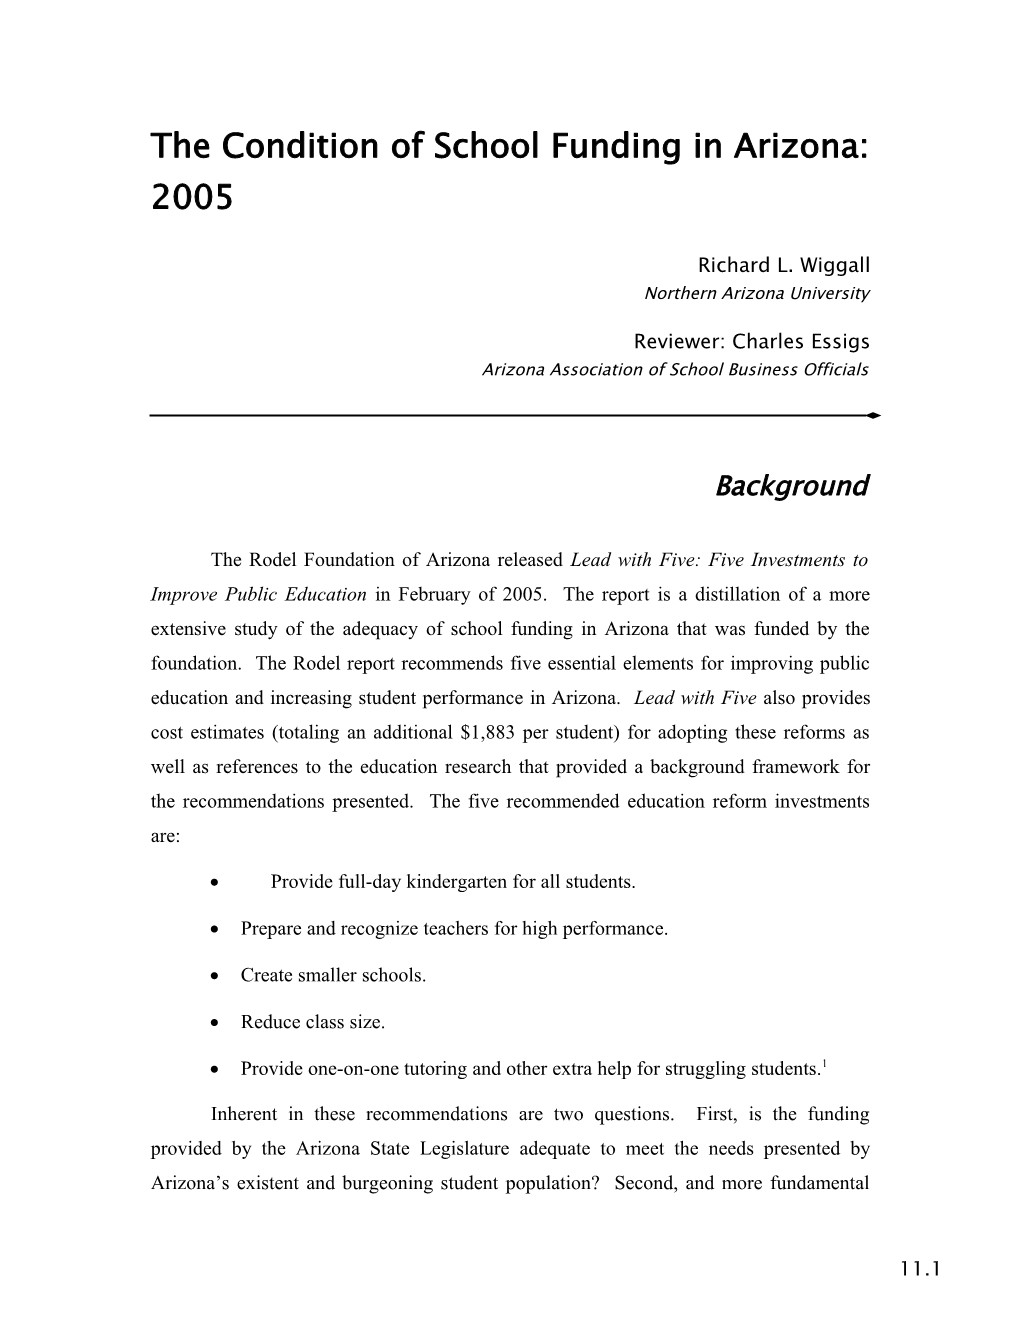 The Condition of School Funding in Arizona: 2005